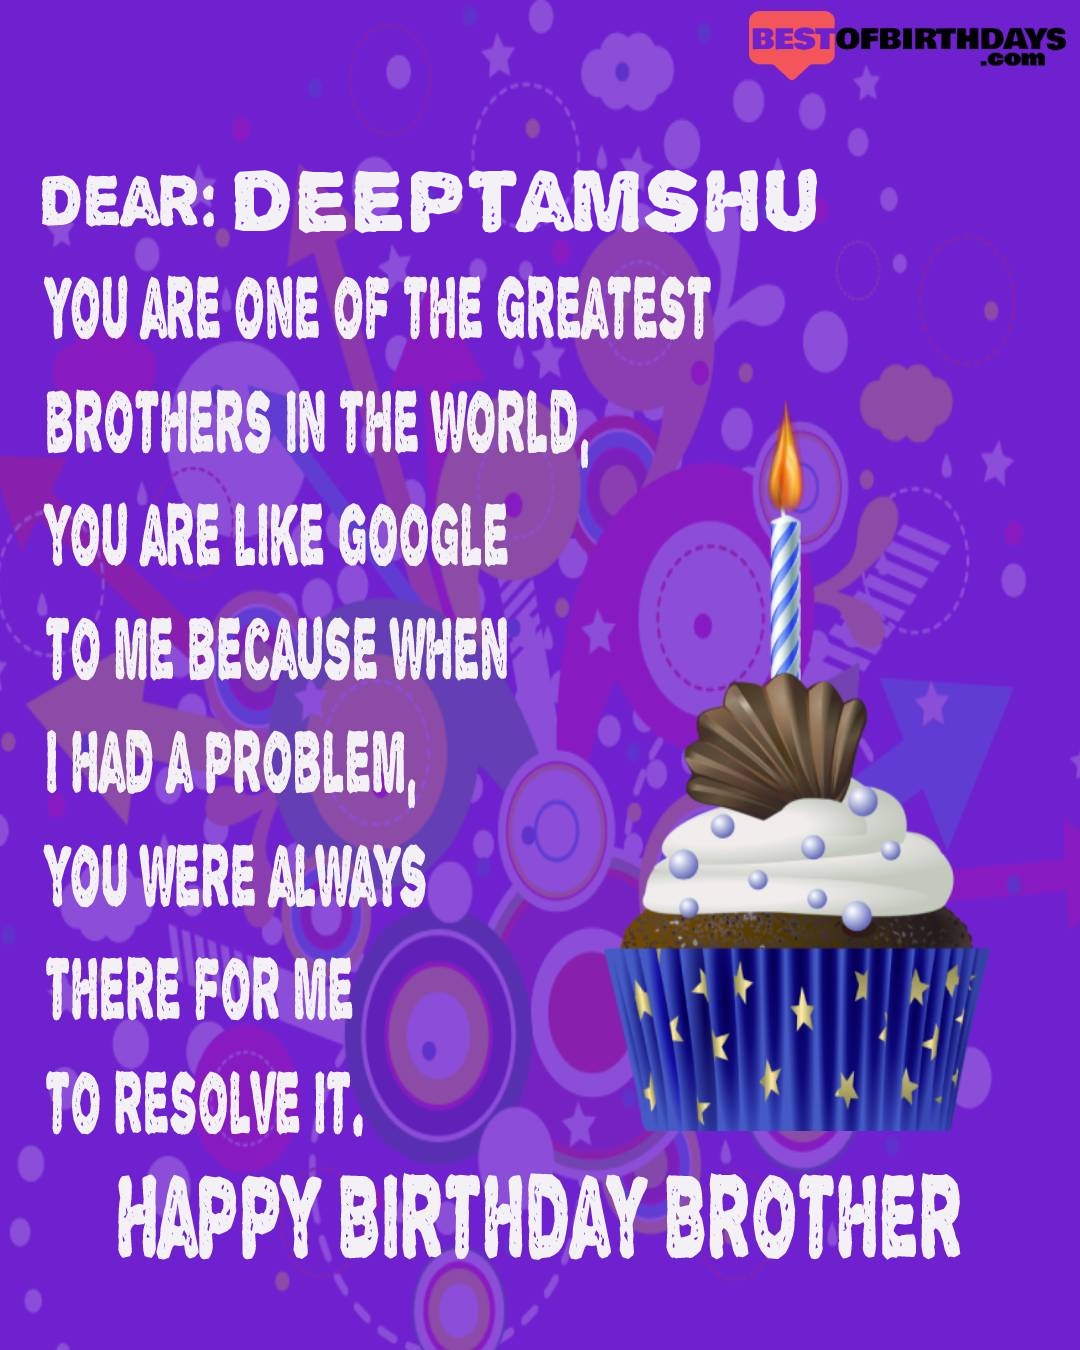 Happy birthday deeptamshu bhai brother bro